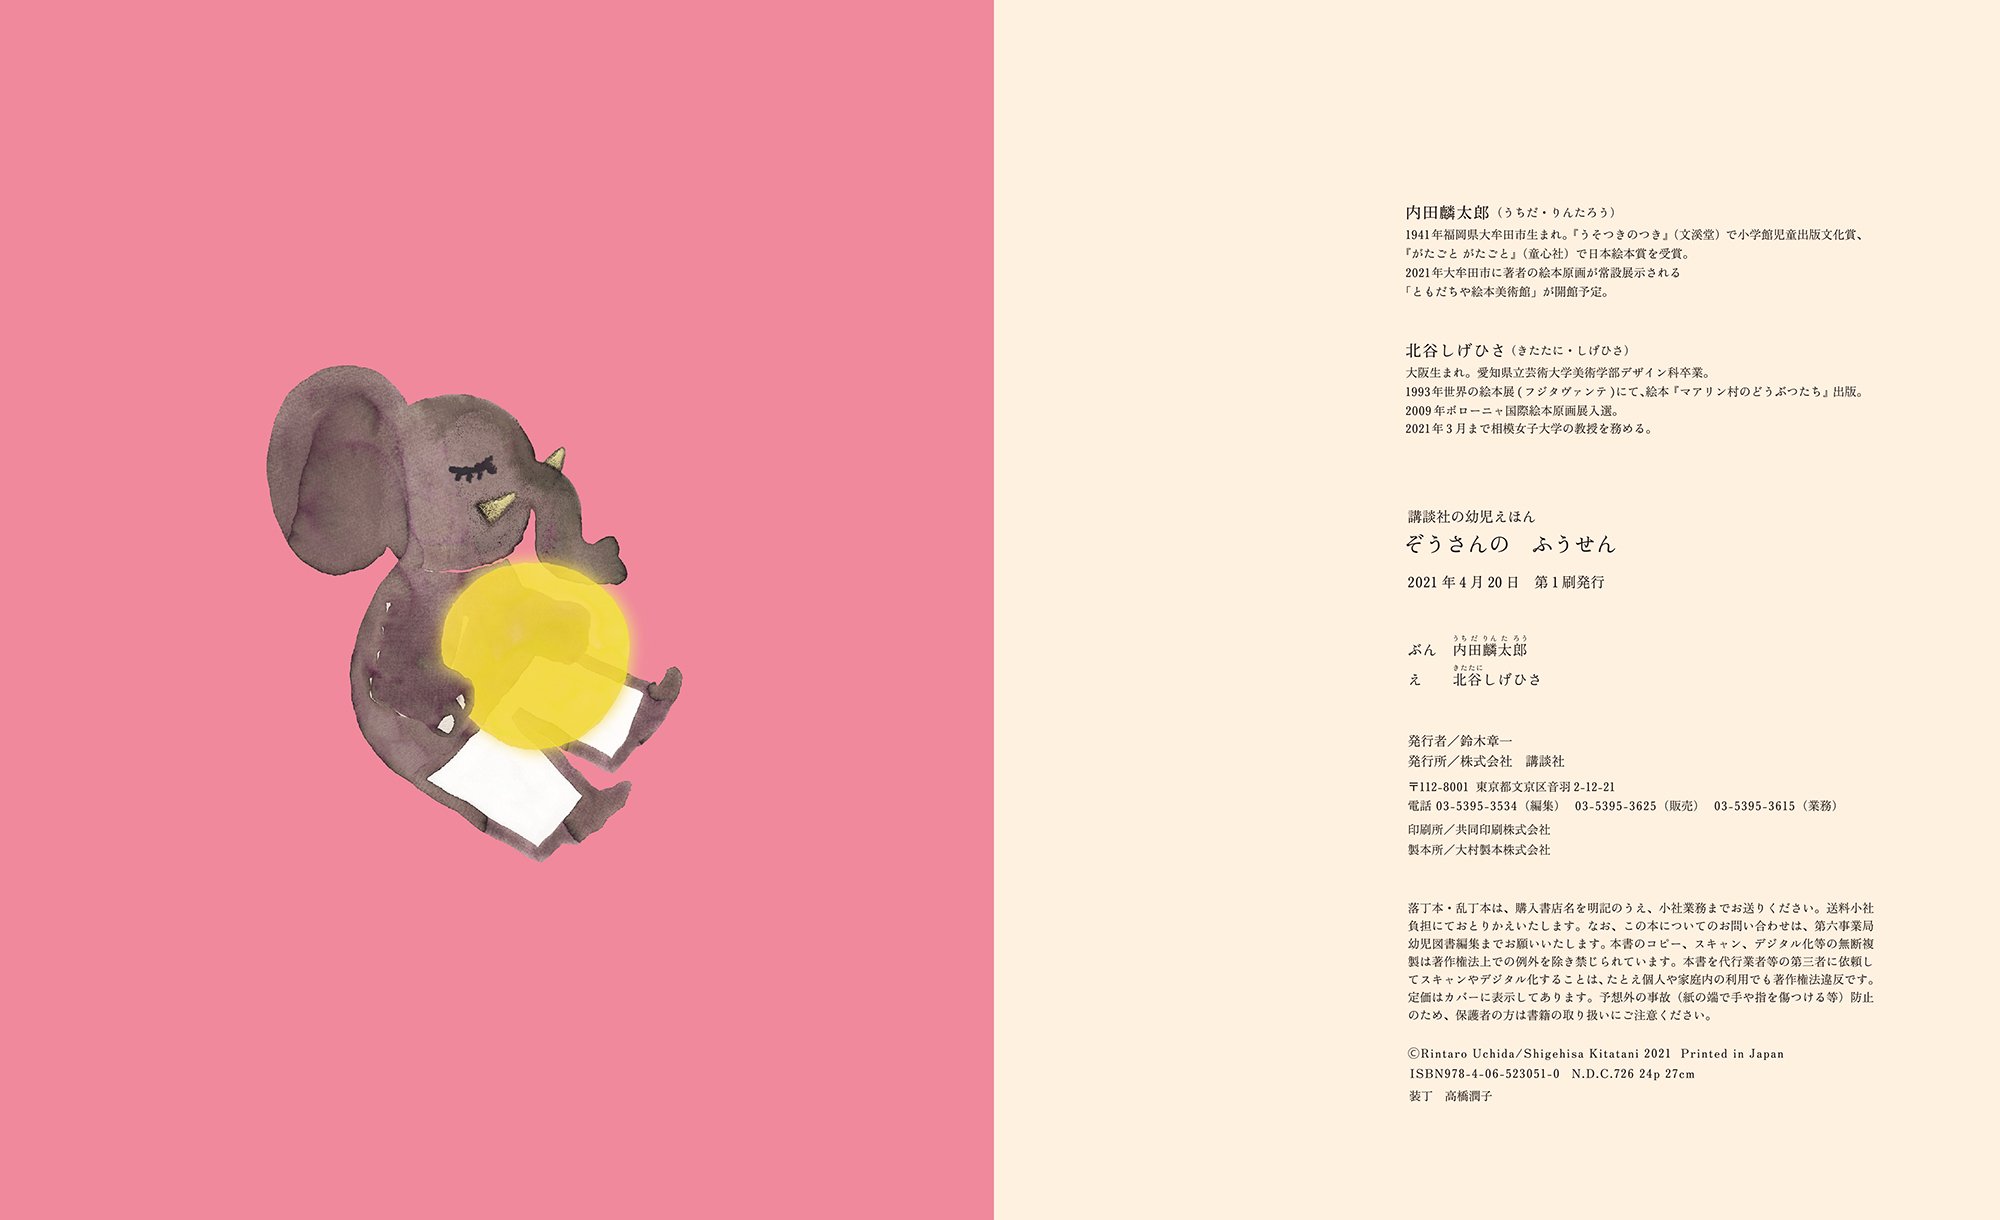 The Elephant_s Balloon, 24-25, Children Book, Kodansha Editon, April 2021.jpg